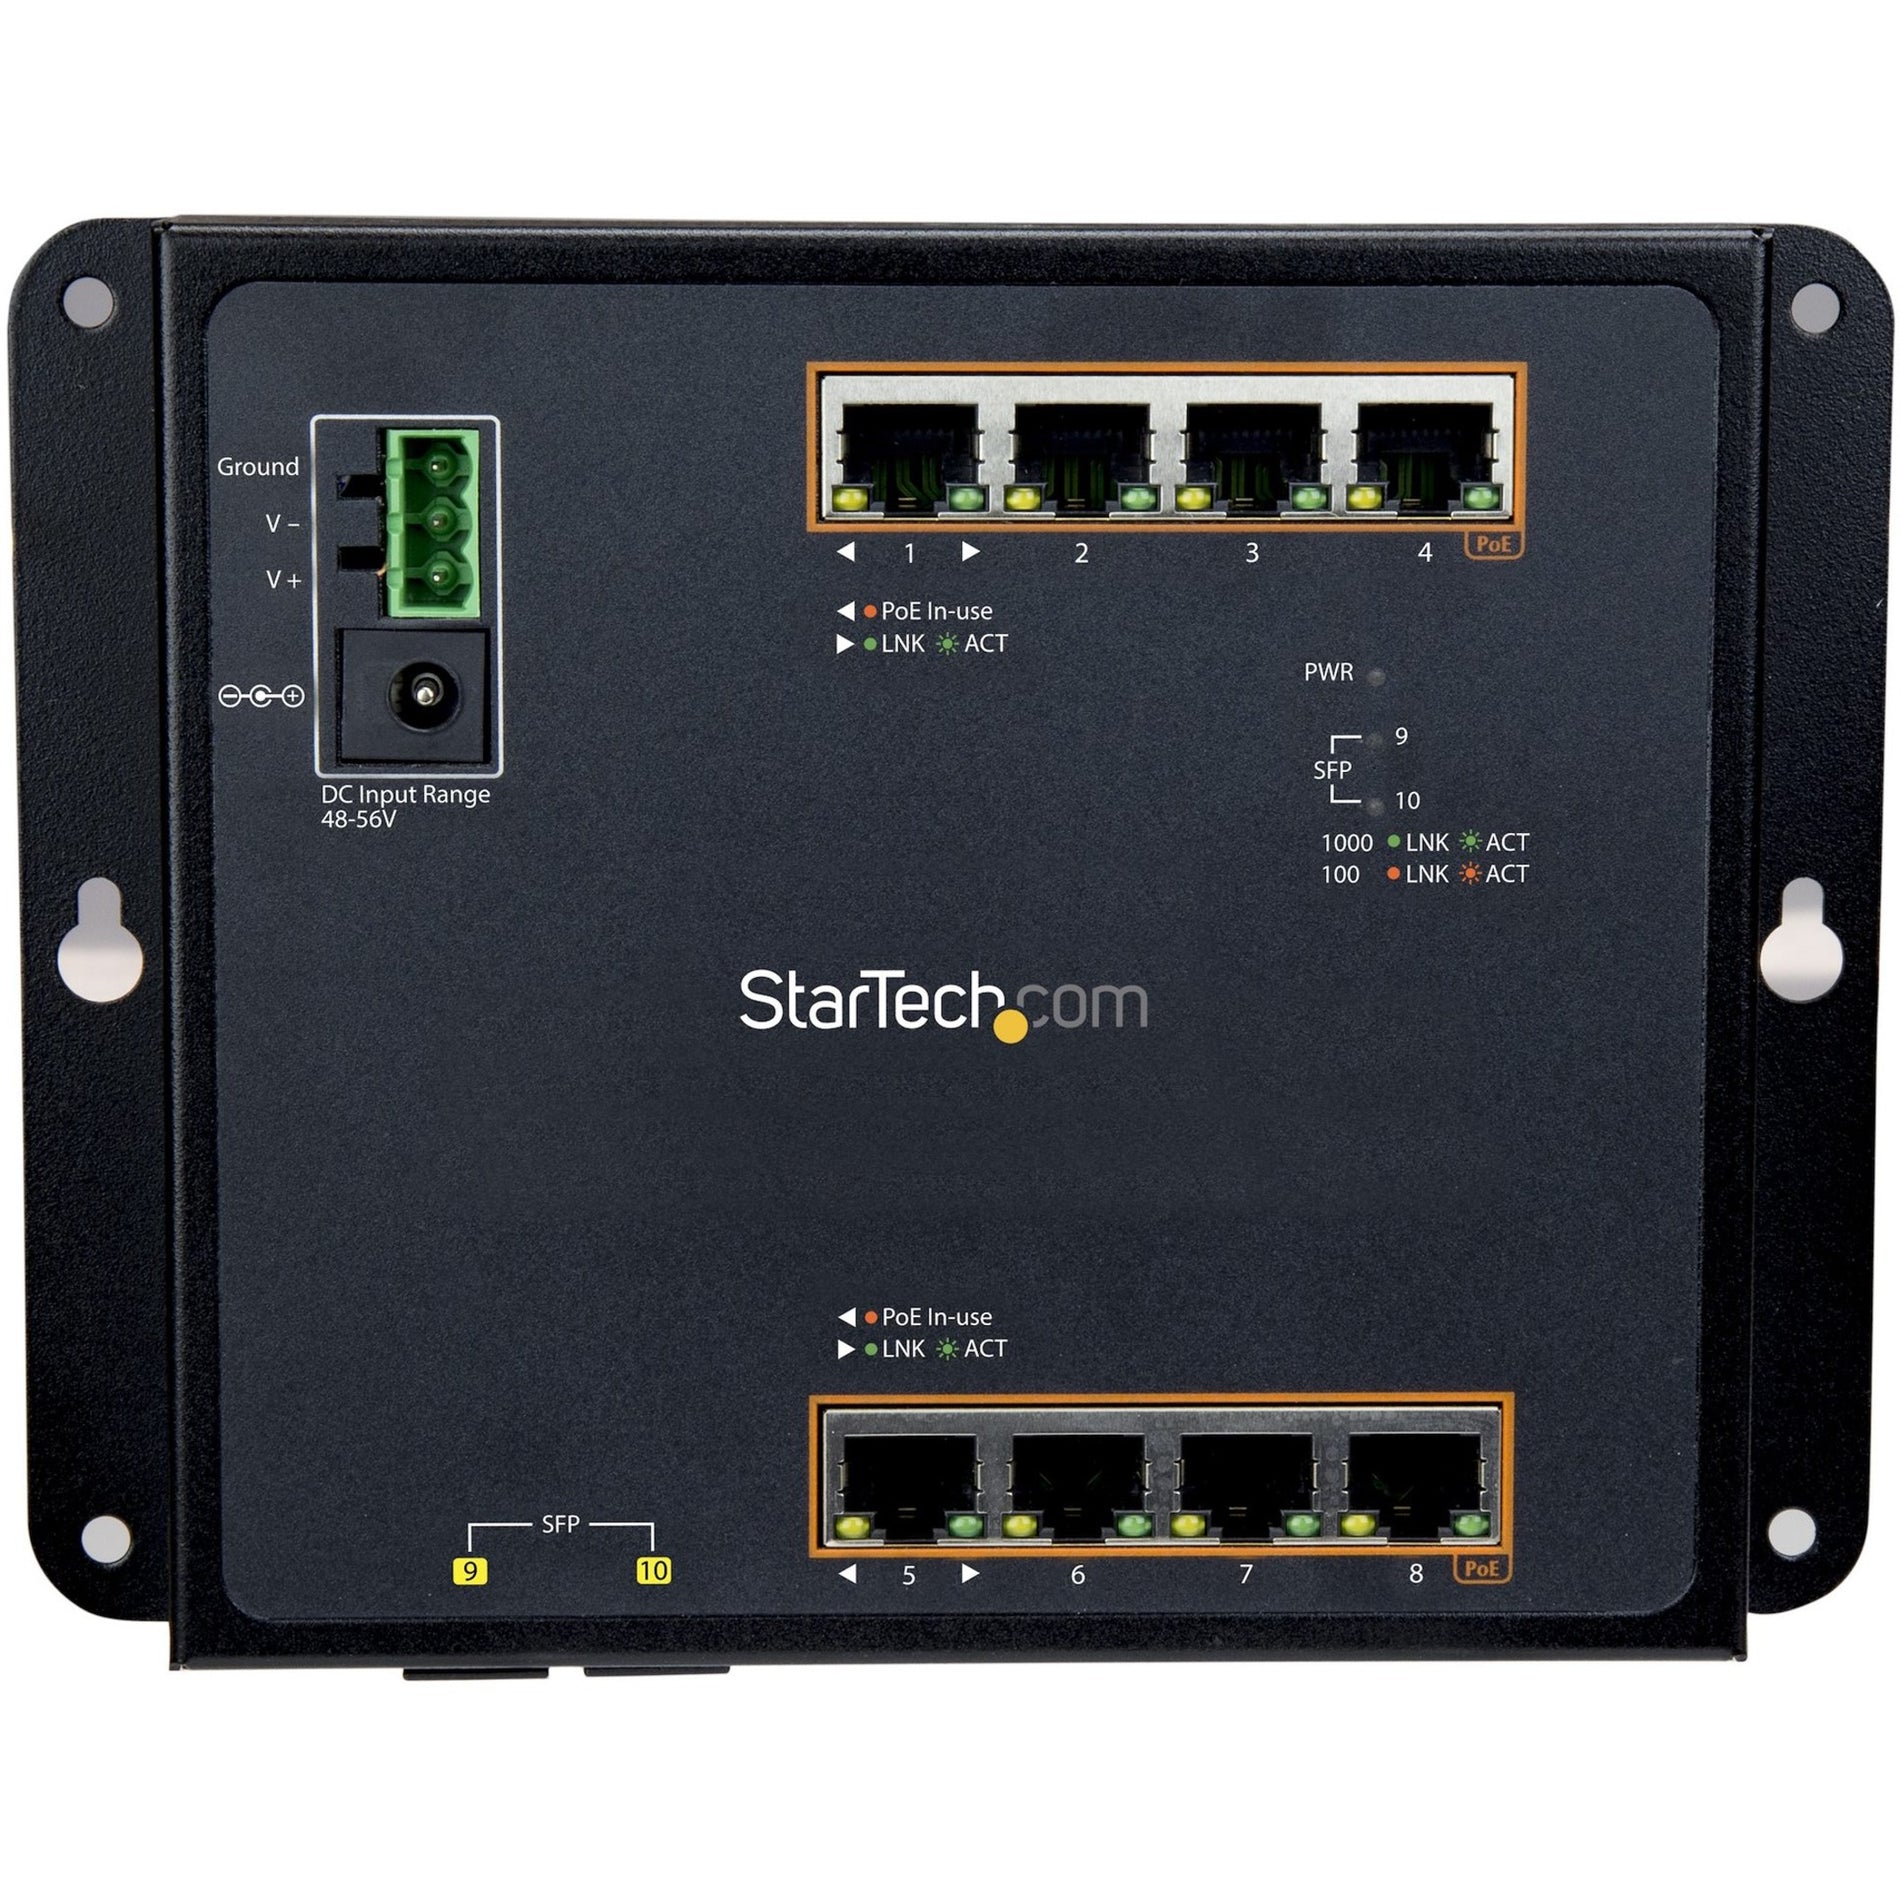 StarTech.com IES101GP2SFW 8-Port Gigabit Ethernet Switch, Industrial Managed Network Switch, Wall Mount